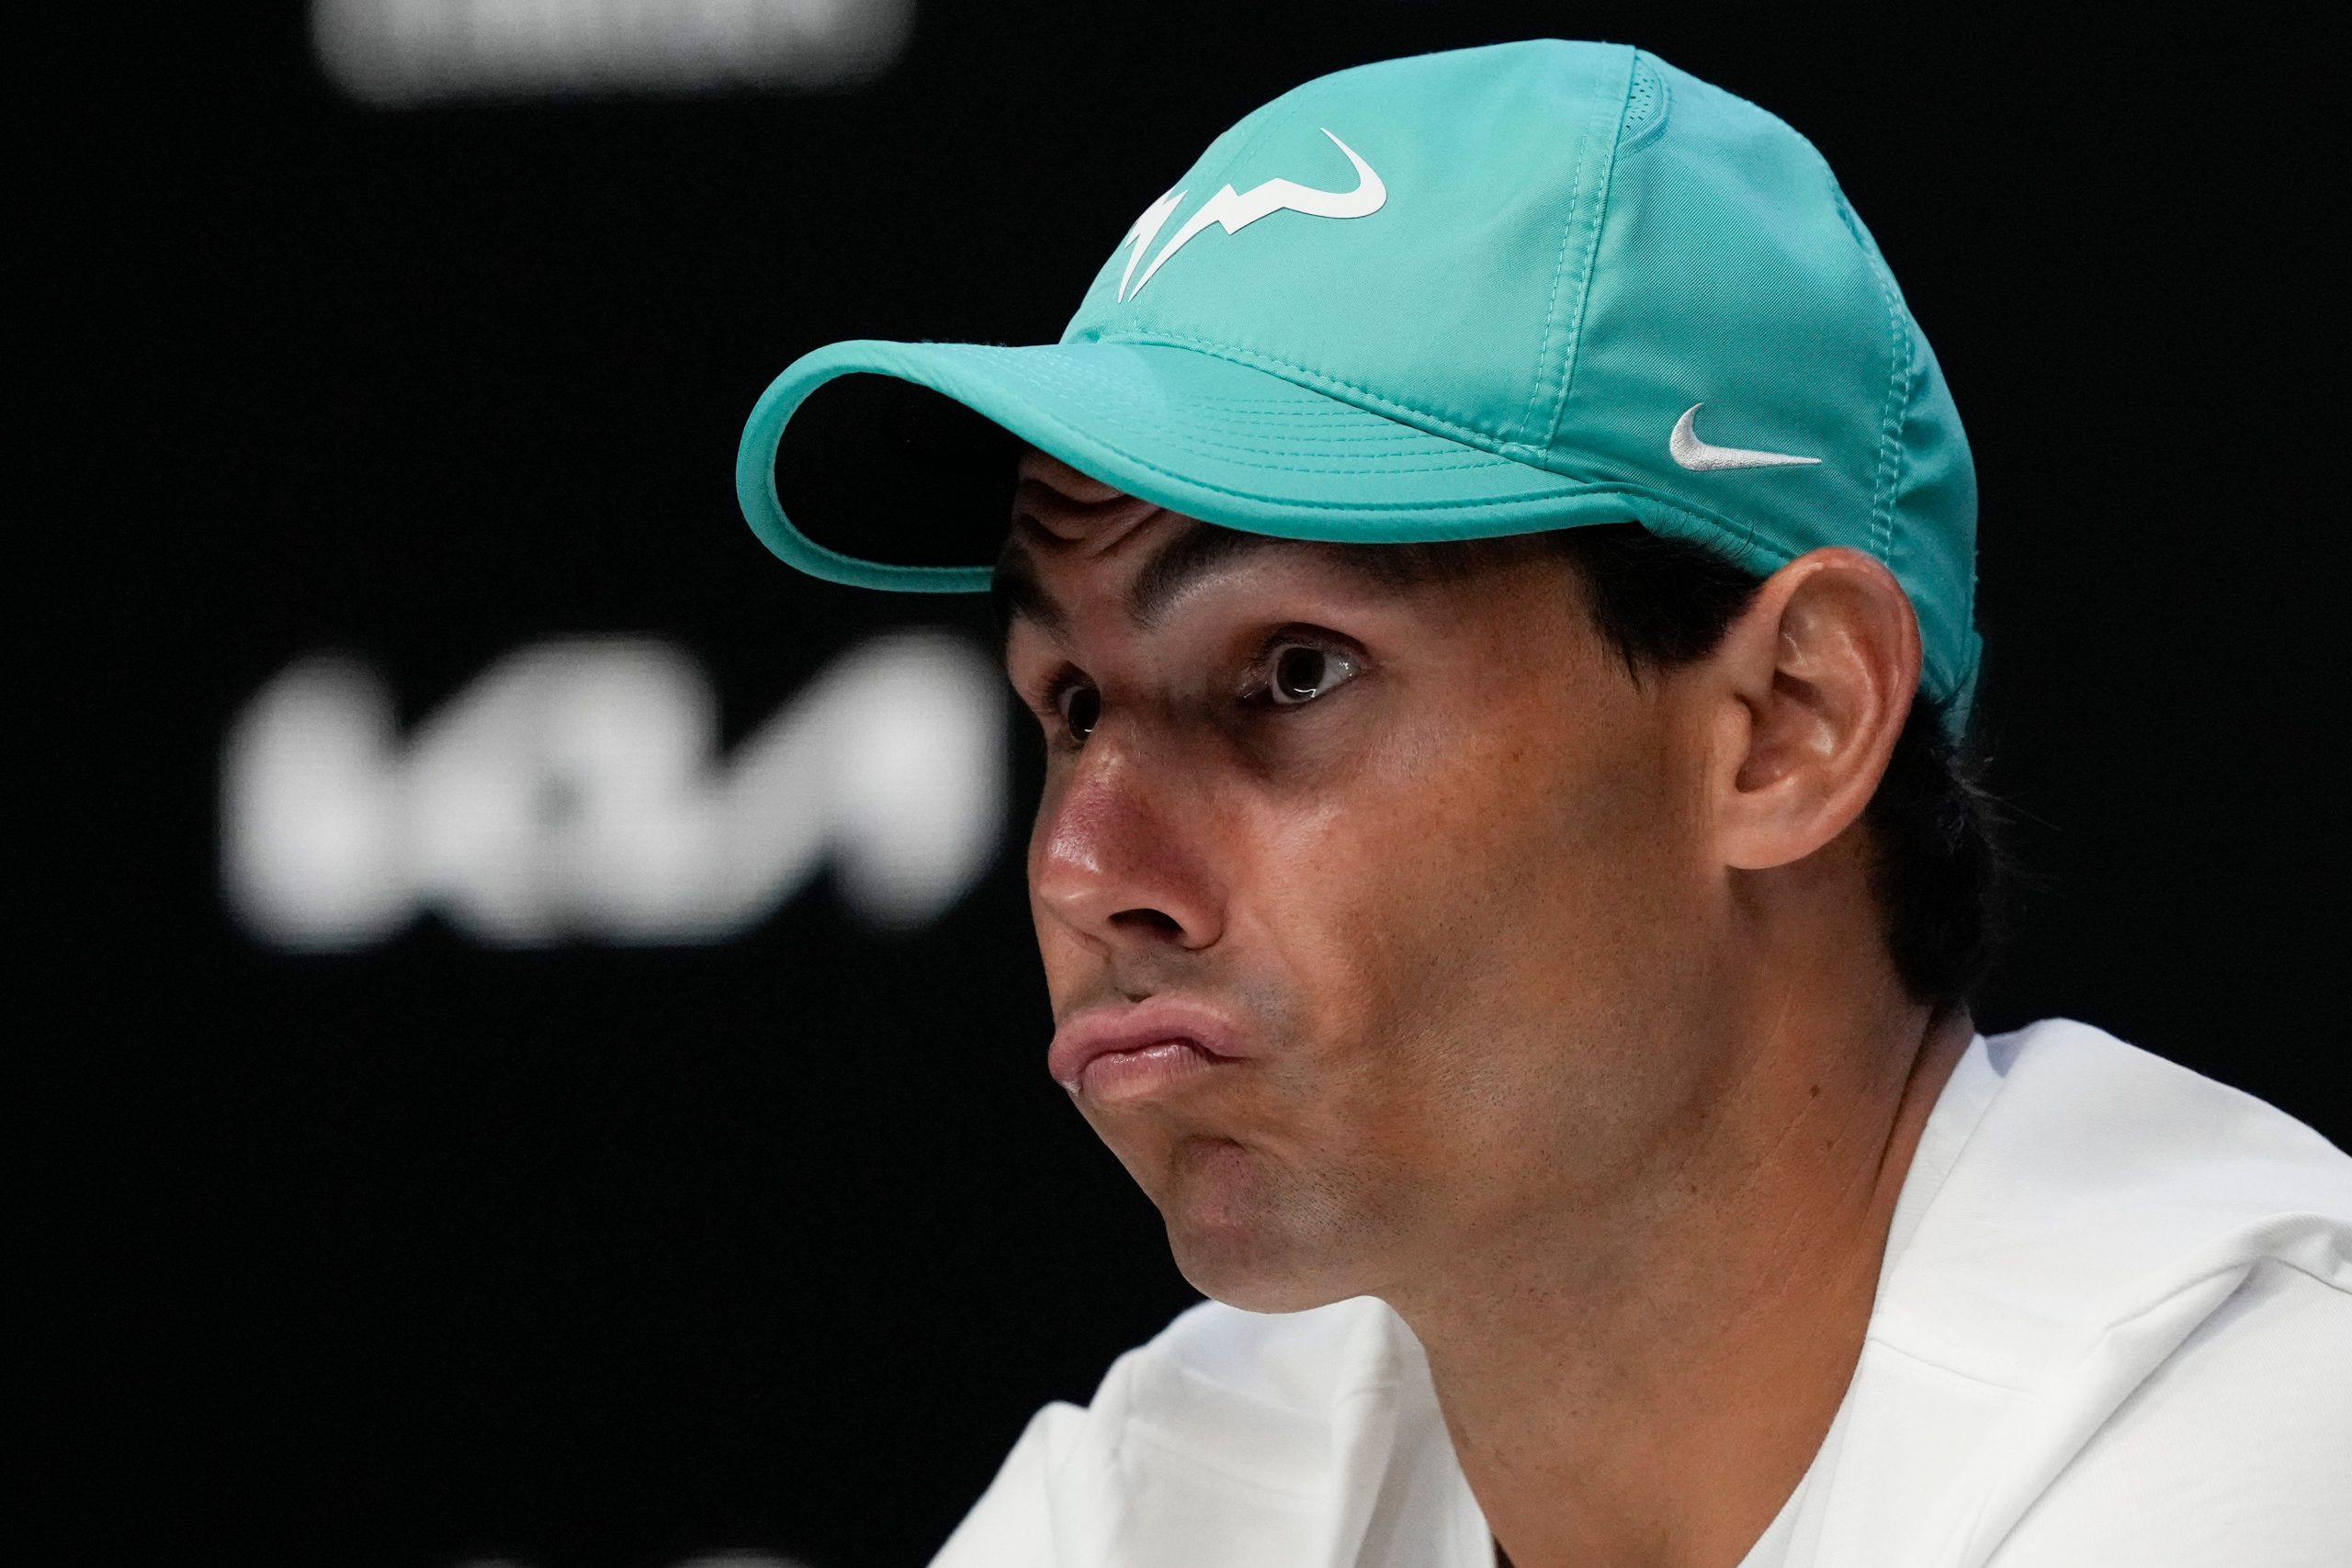 ‘Bit tired of the situation’: Rafael Nadal, others on Novak Djokovic saga